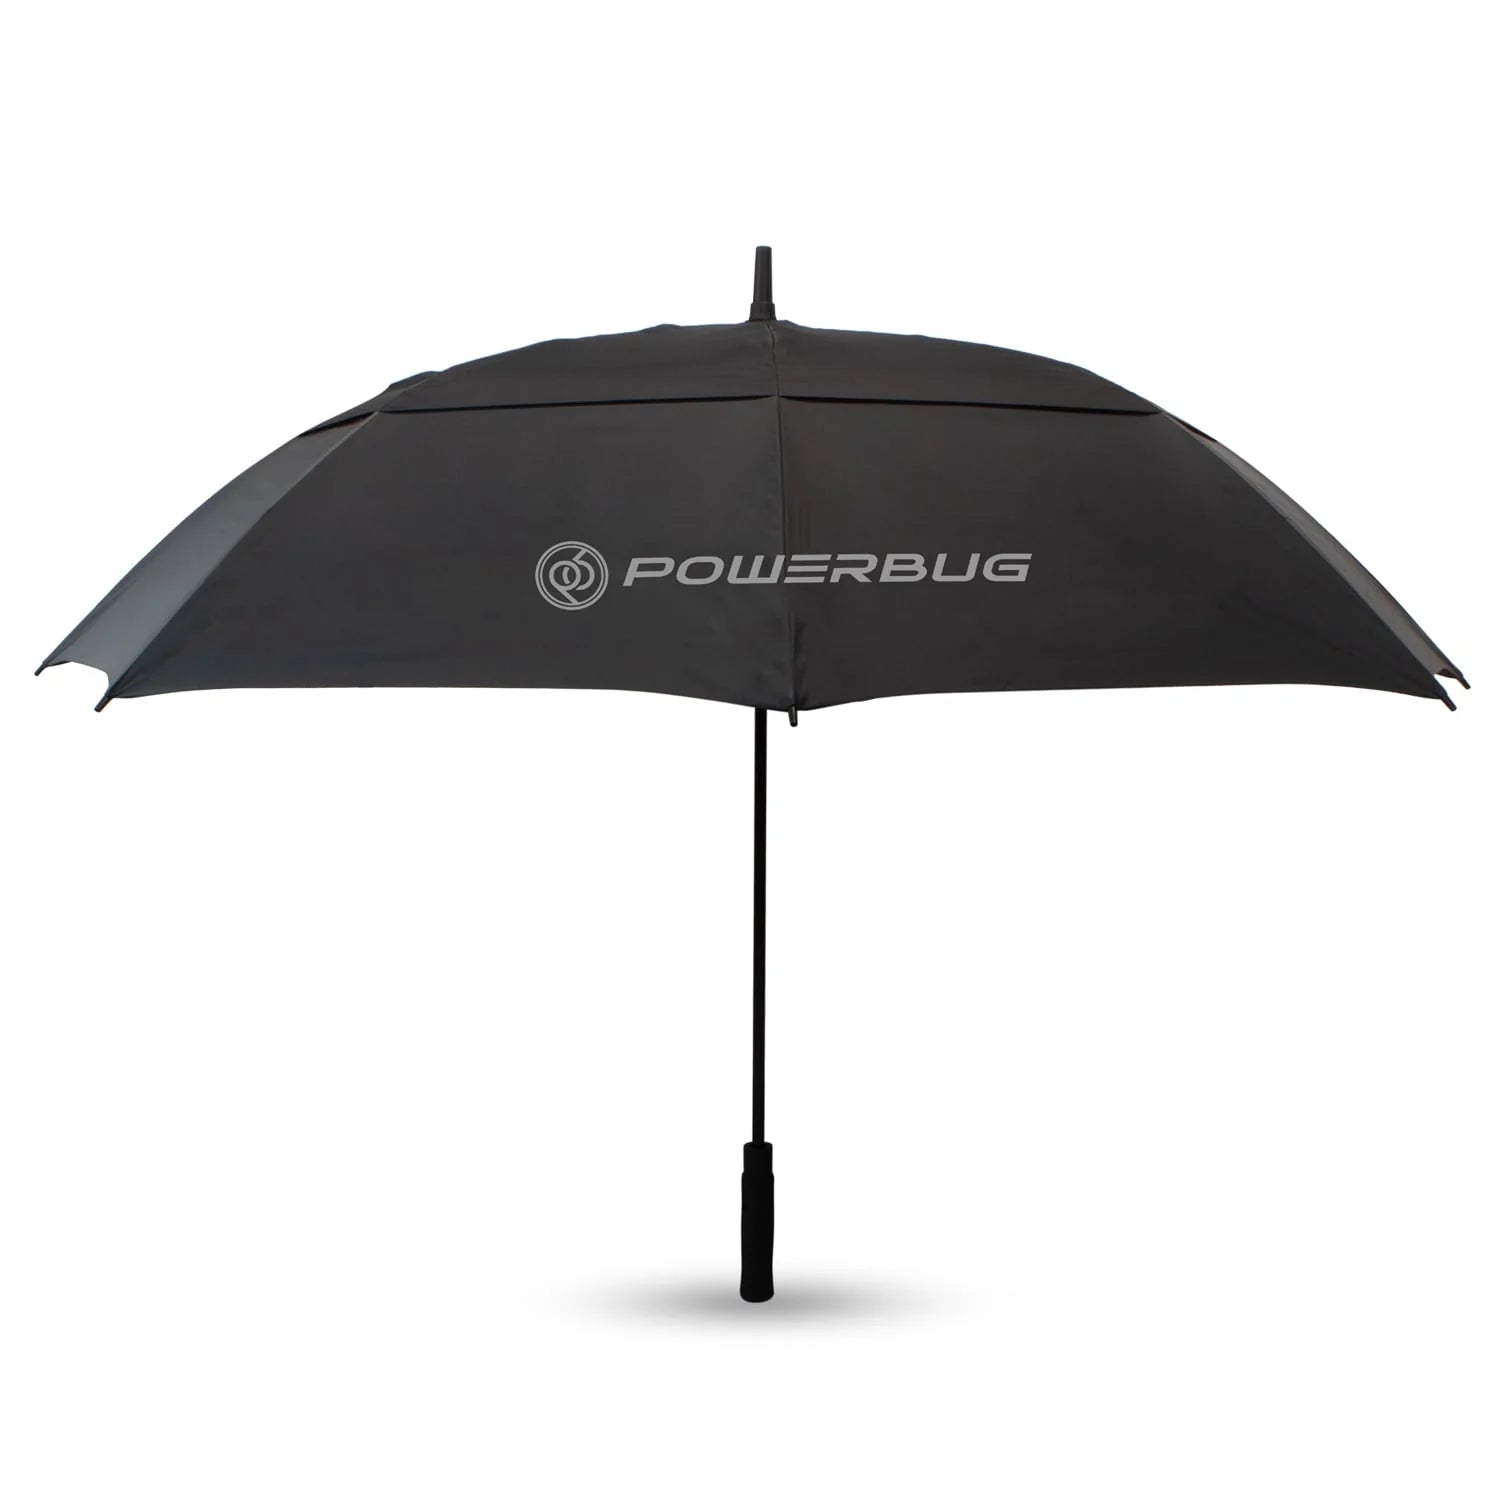 PowerBug XL golf umbrella